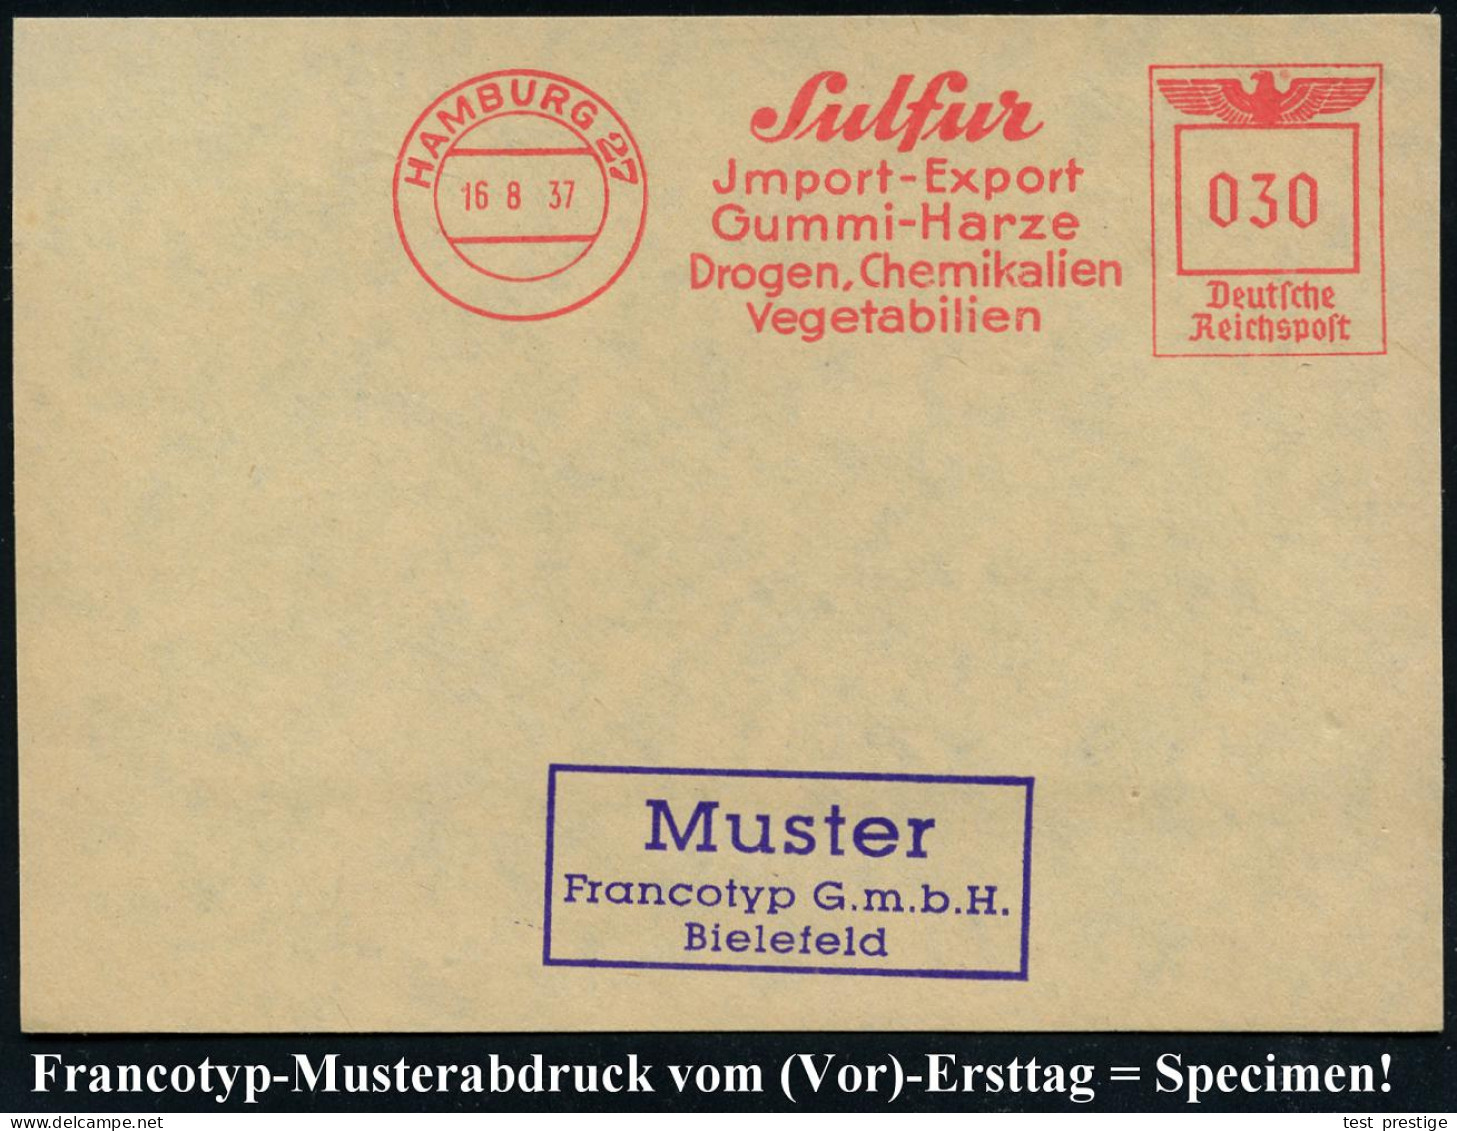 HAMBURG 27/ Sulfur/ Jmport-Export/ Gummi-Harze/ Drogen,Chemikalien.. 1937 (16.8.) AFS-Musterabdruck Francotyp "Reichsadl - Chemistry